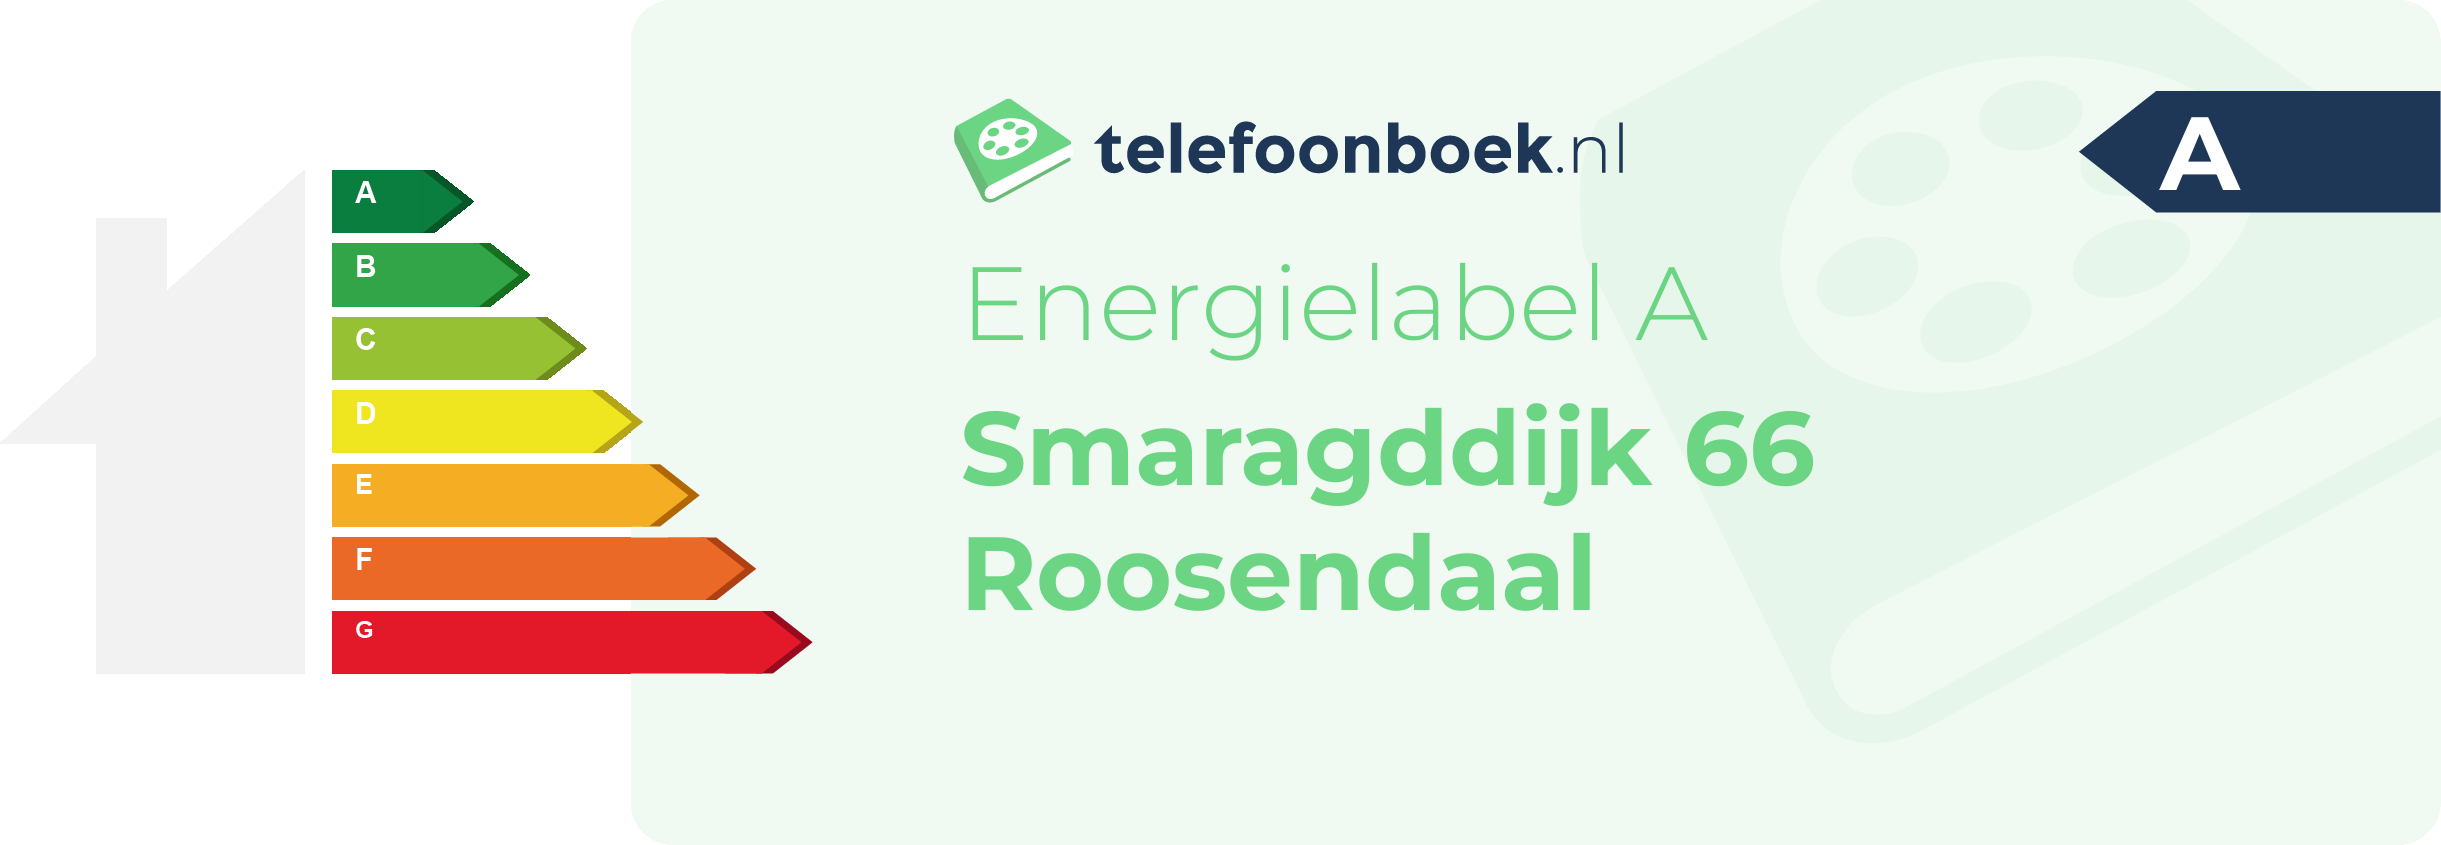 Energielabel Smaragddijk 66 Roosendaal